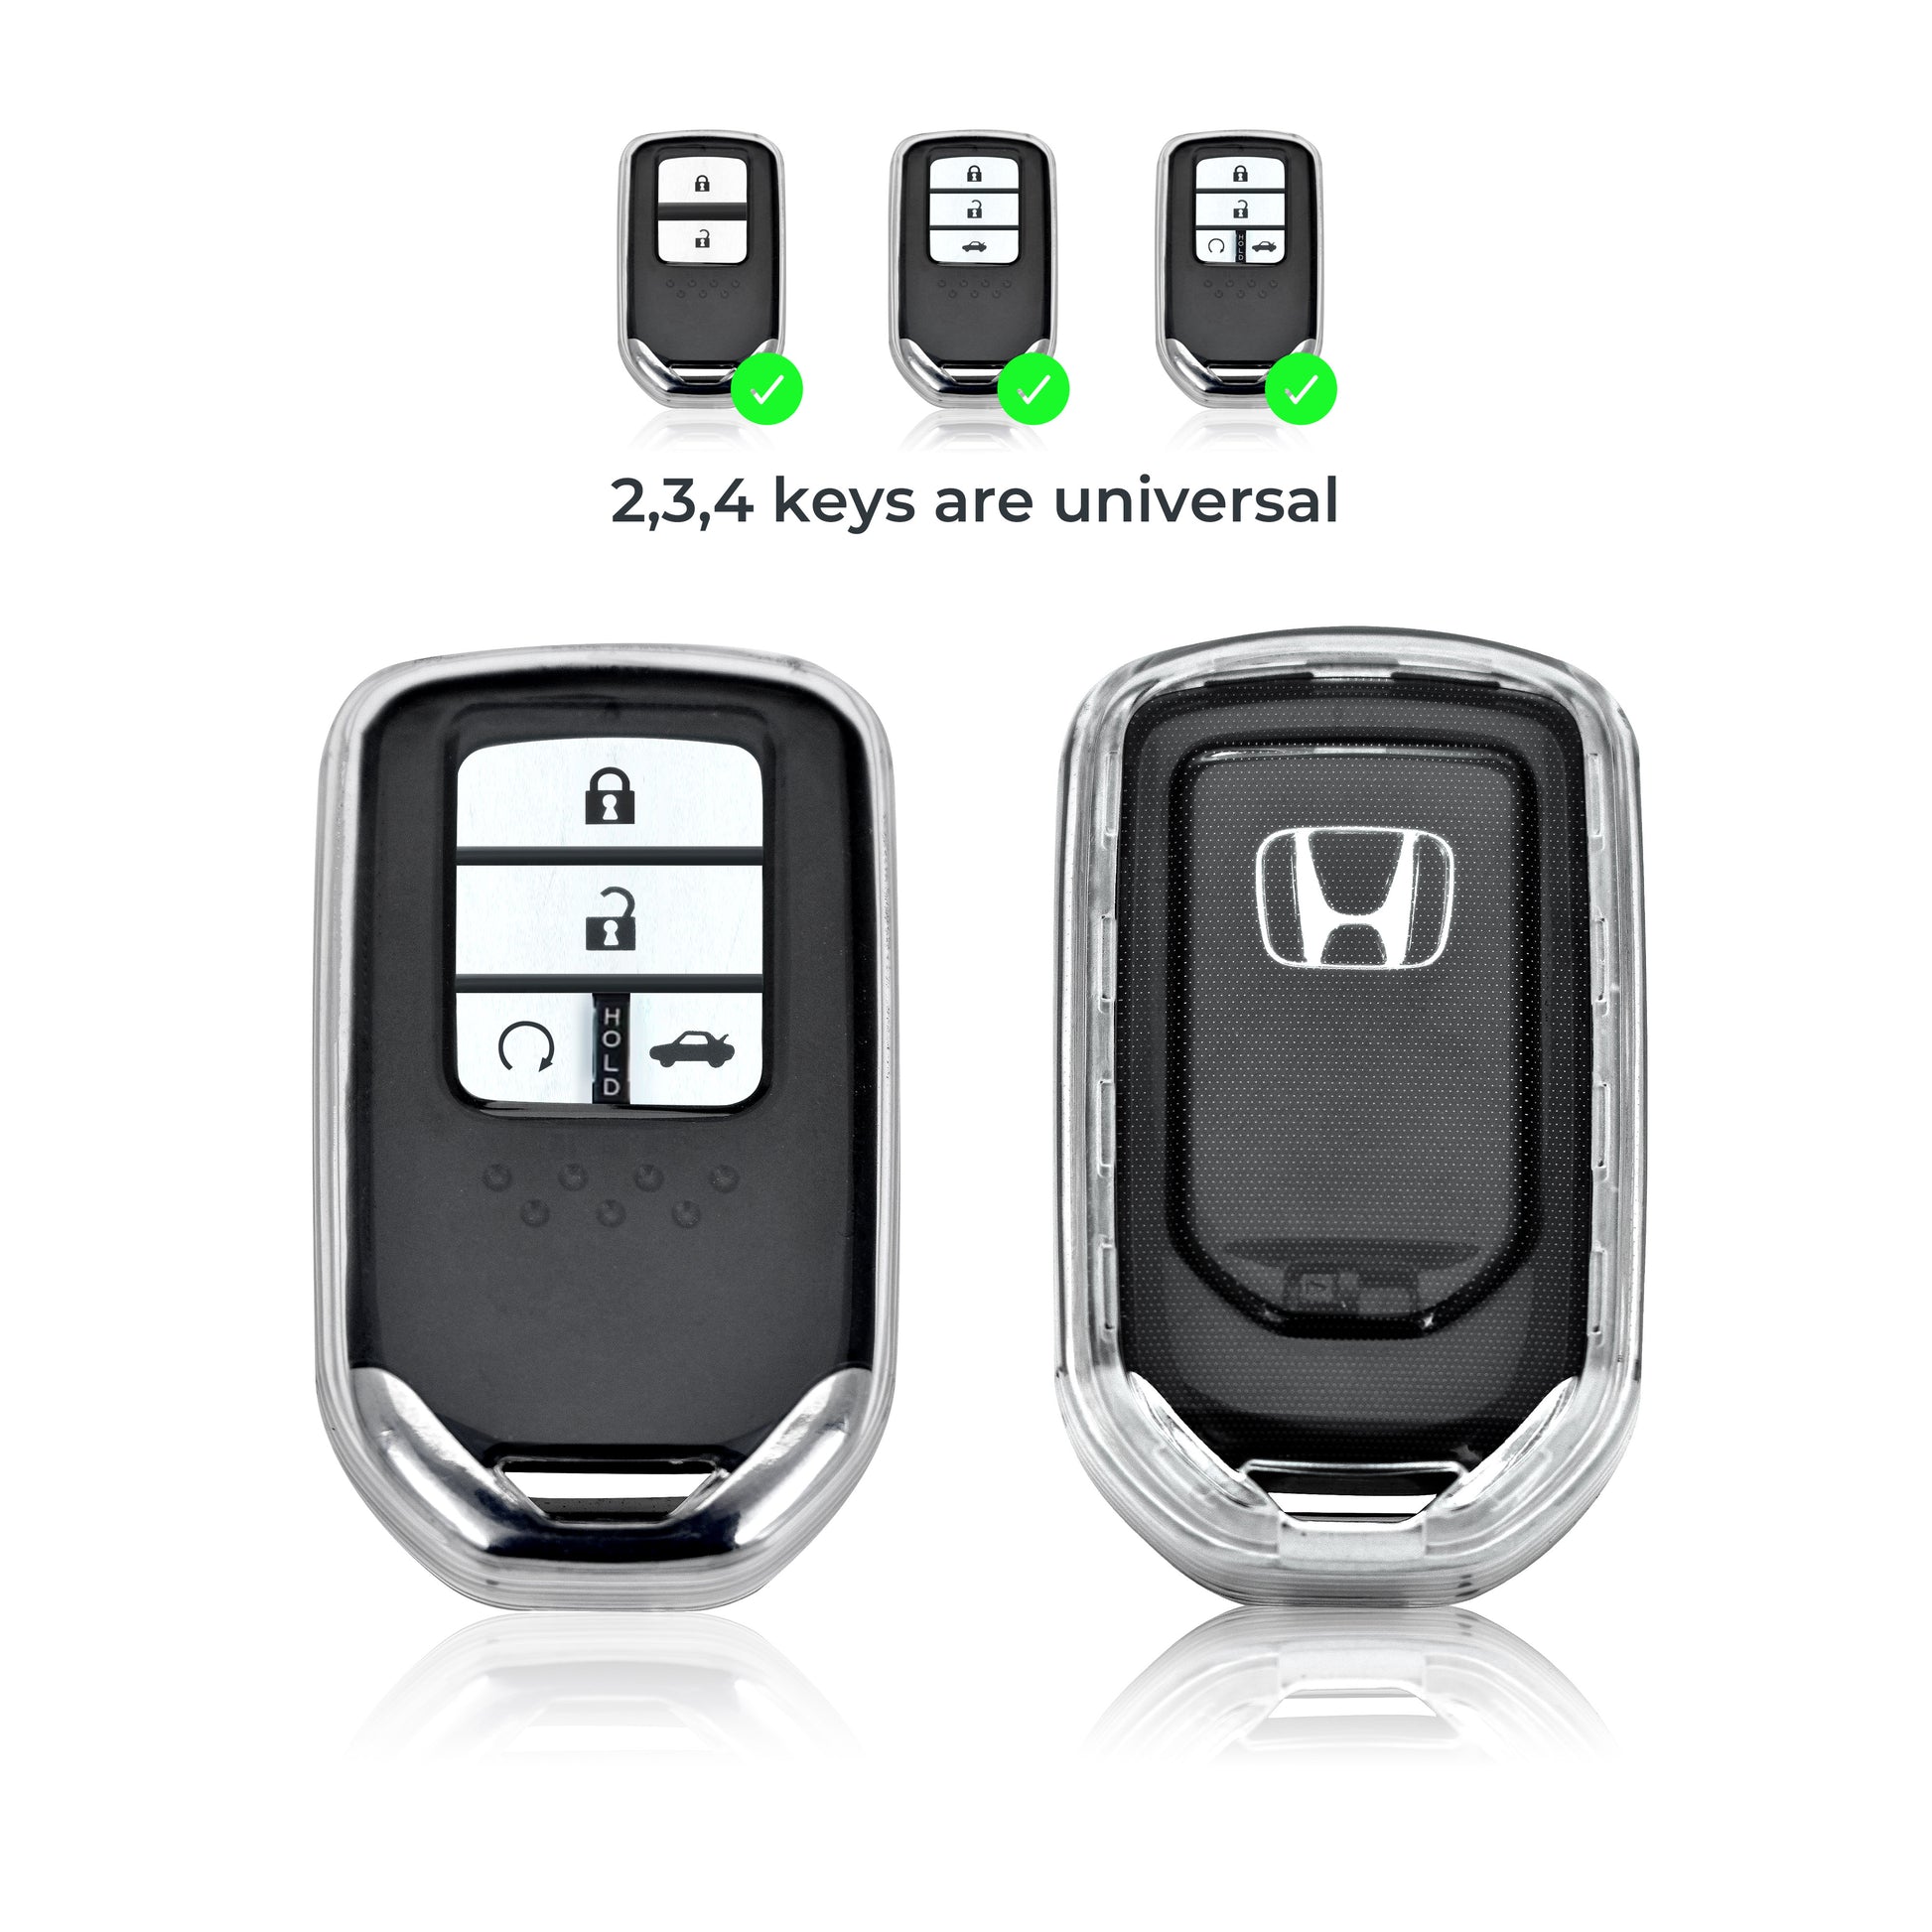 Keyzone clear TPU key cover and diamond keychain fit for City, Elevate, Civic, Jazz, Brio, Amaze, CR-V, WR-V, BR-V, Mobilio, Accord 2b/3b/4b/5b Smart Key (CLTP24+KH08) - Keyzone